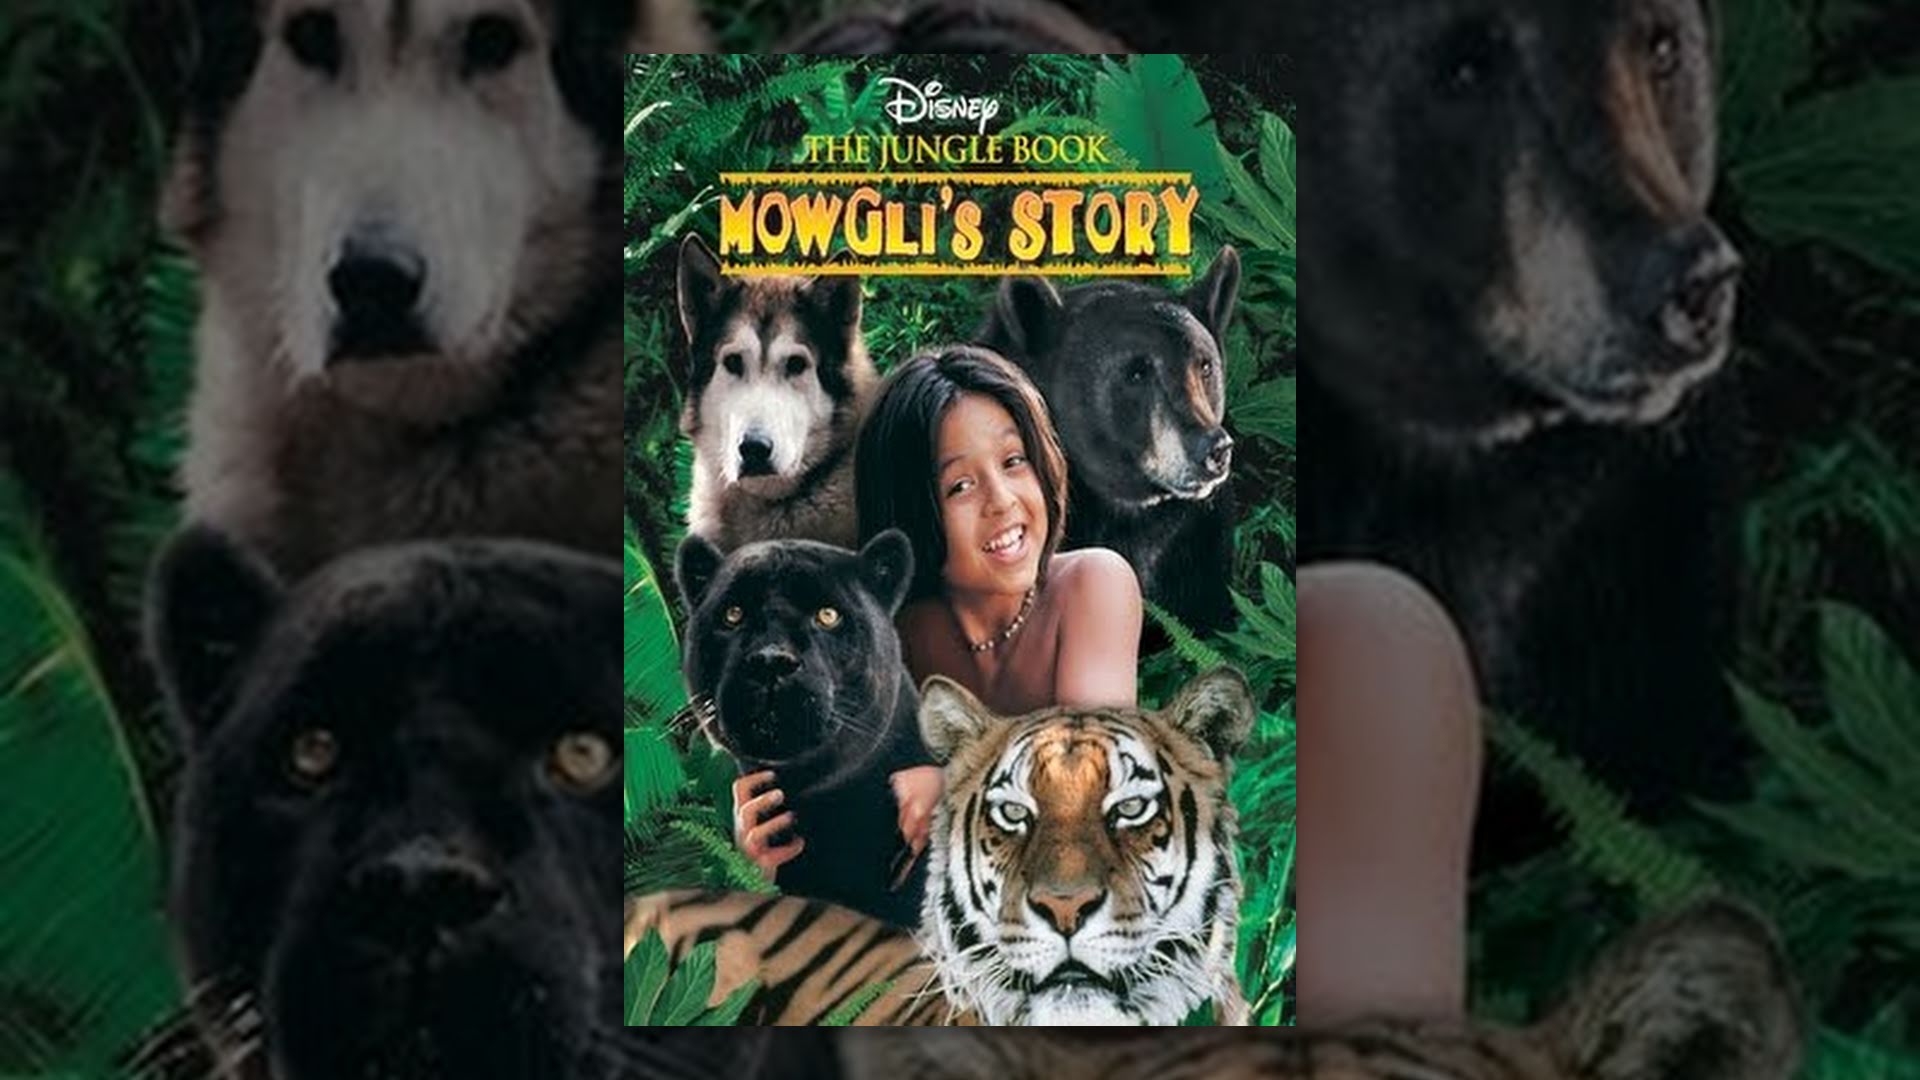 Mowgli's Story